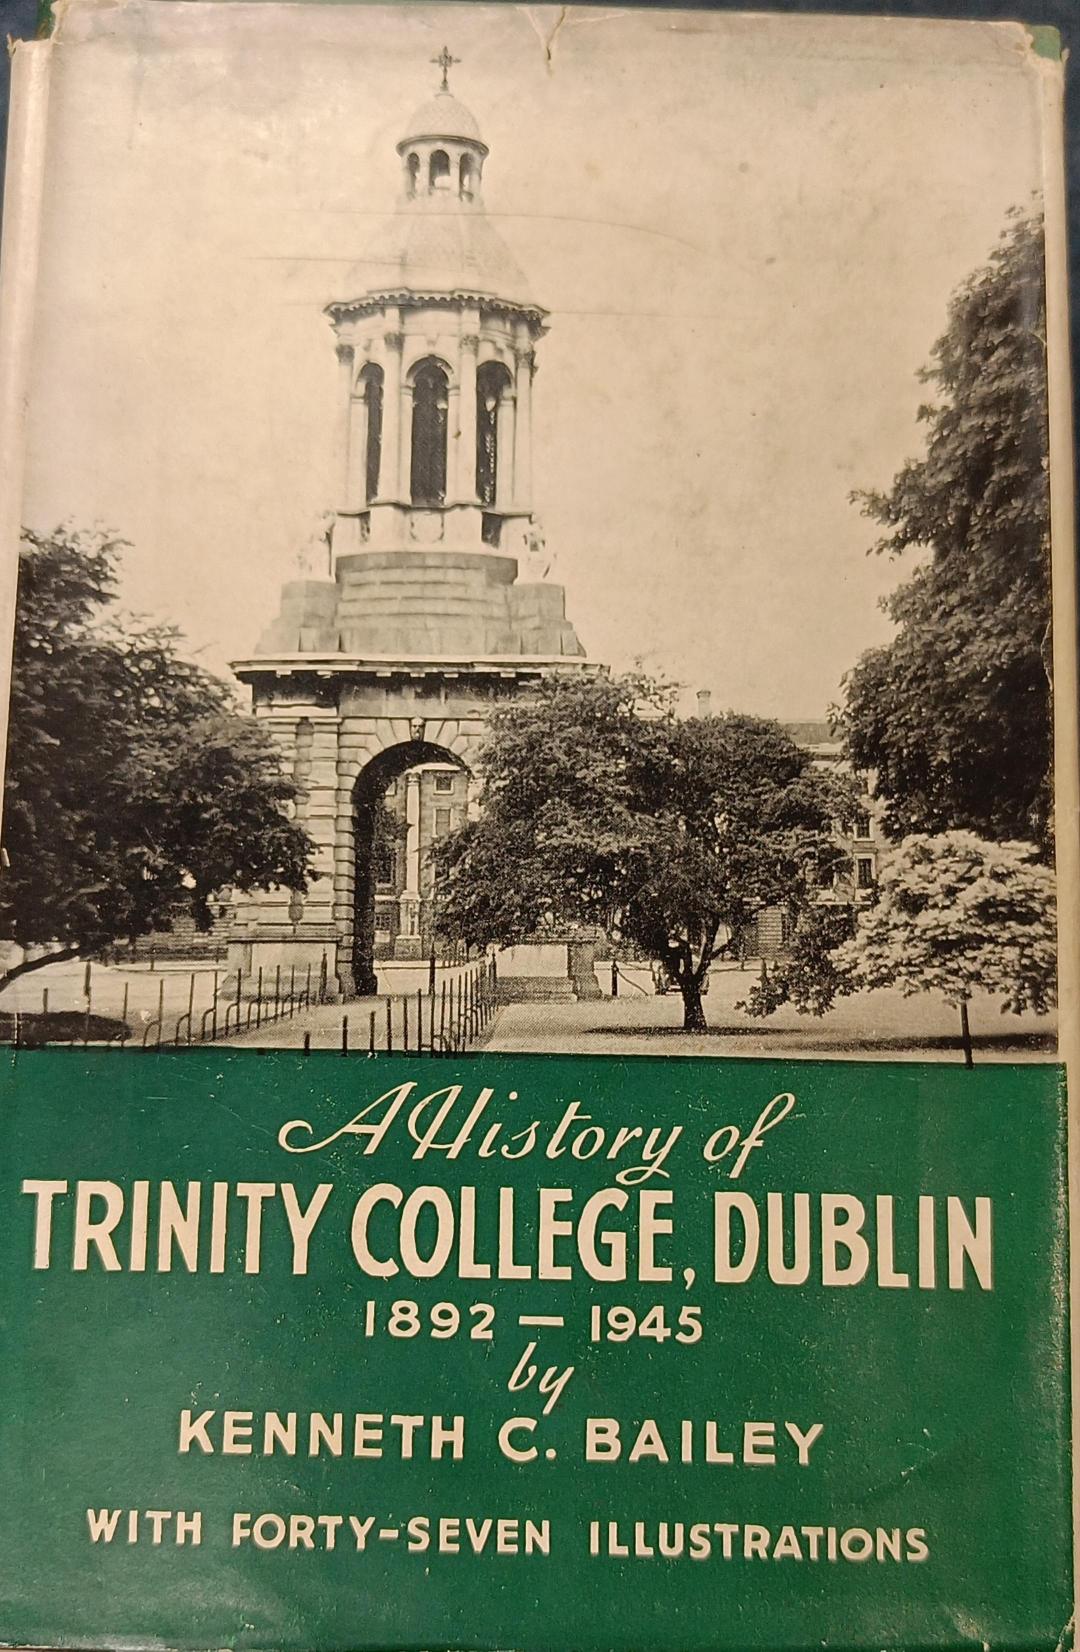 A History of Trinity College Dublin 1892-1945, by Kennth C. Bailey